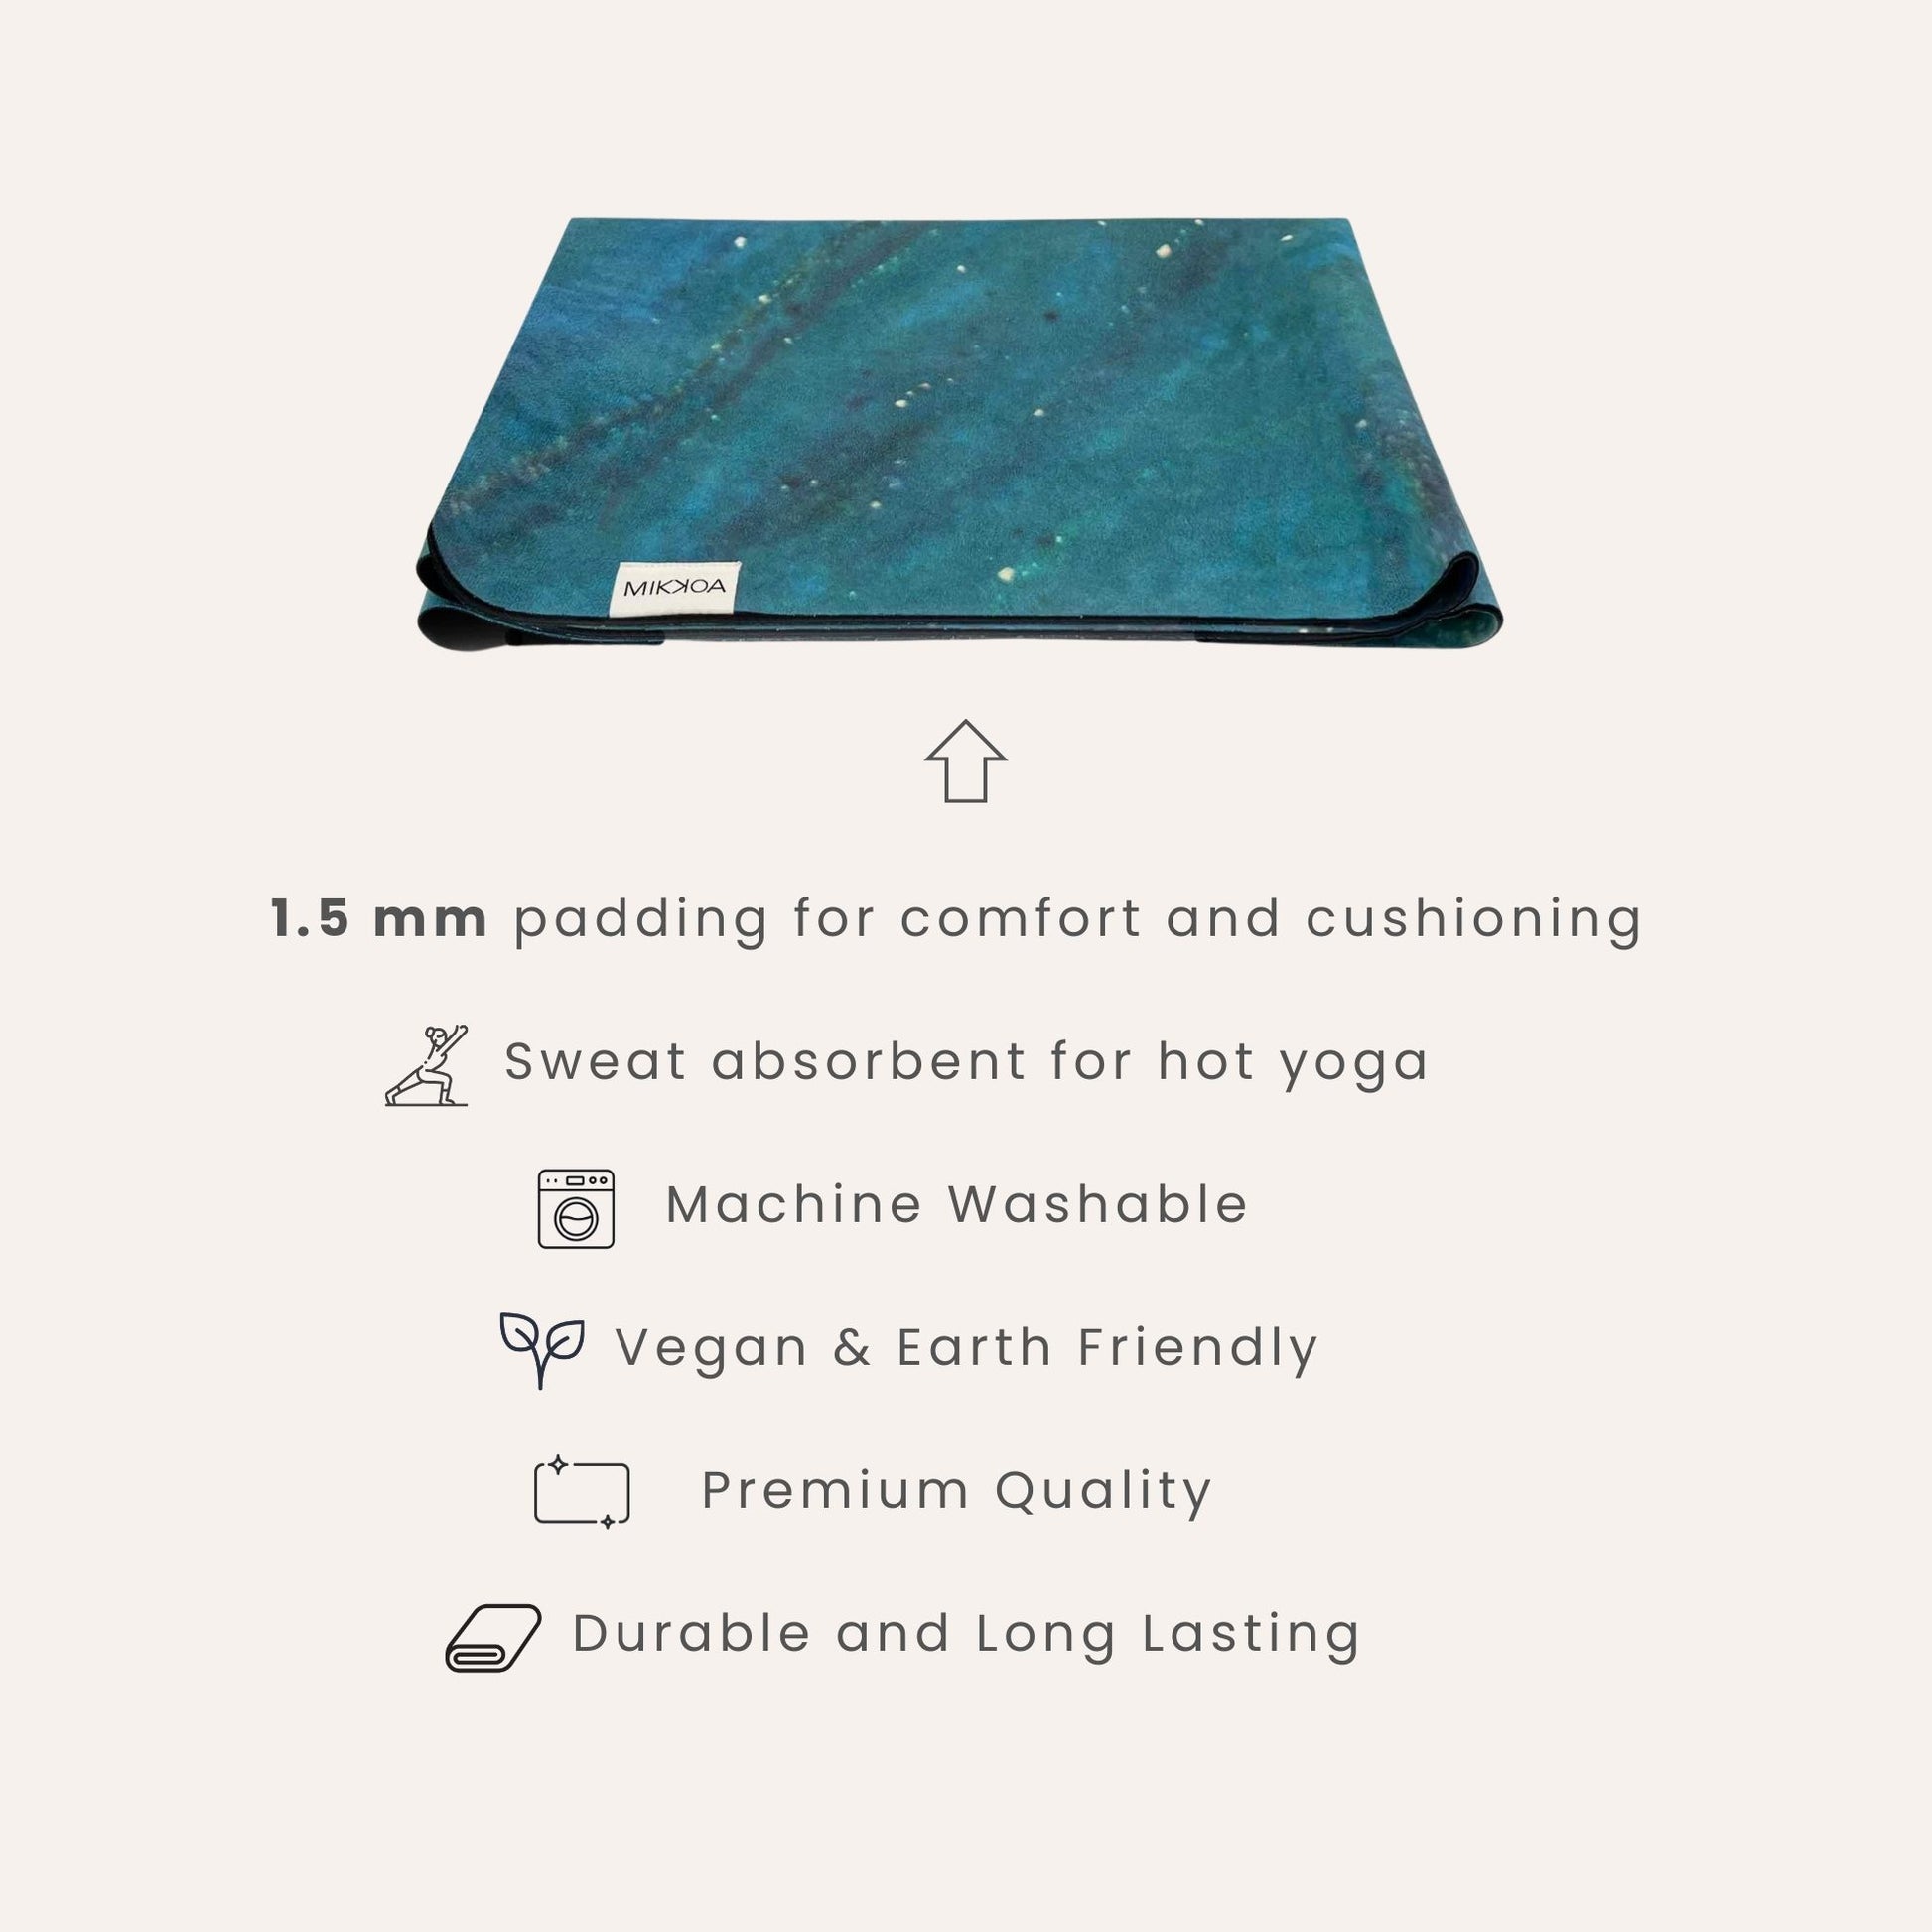 Folding Yoga Mat-Folding Yoga Mat Features-Mikkoa Folding Galaxy Aurora Yoga Mat